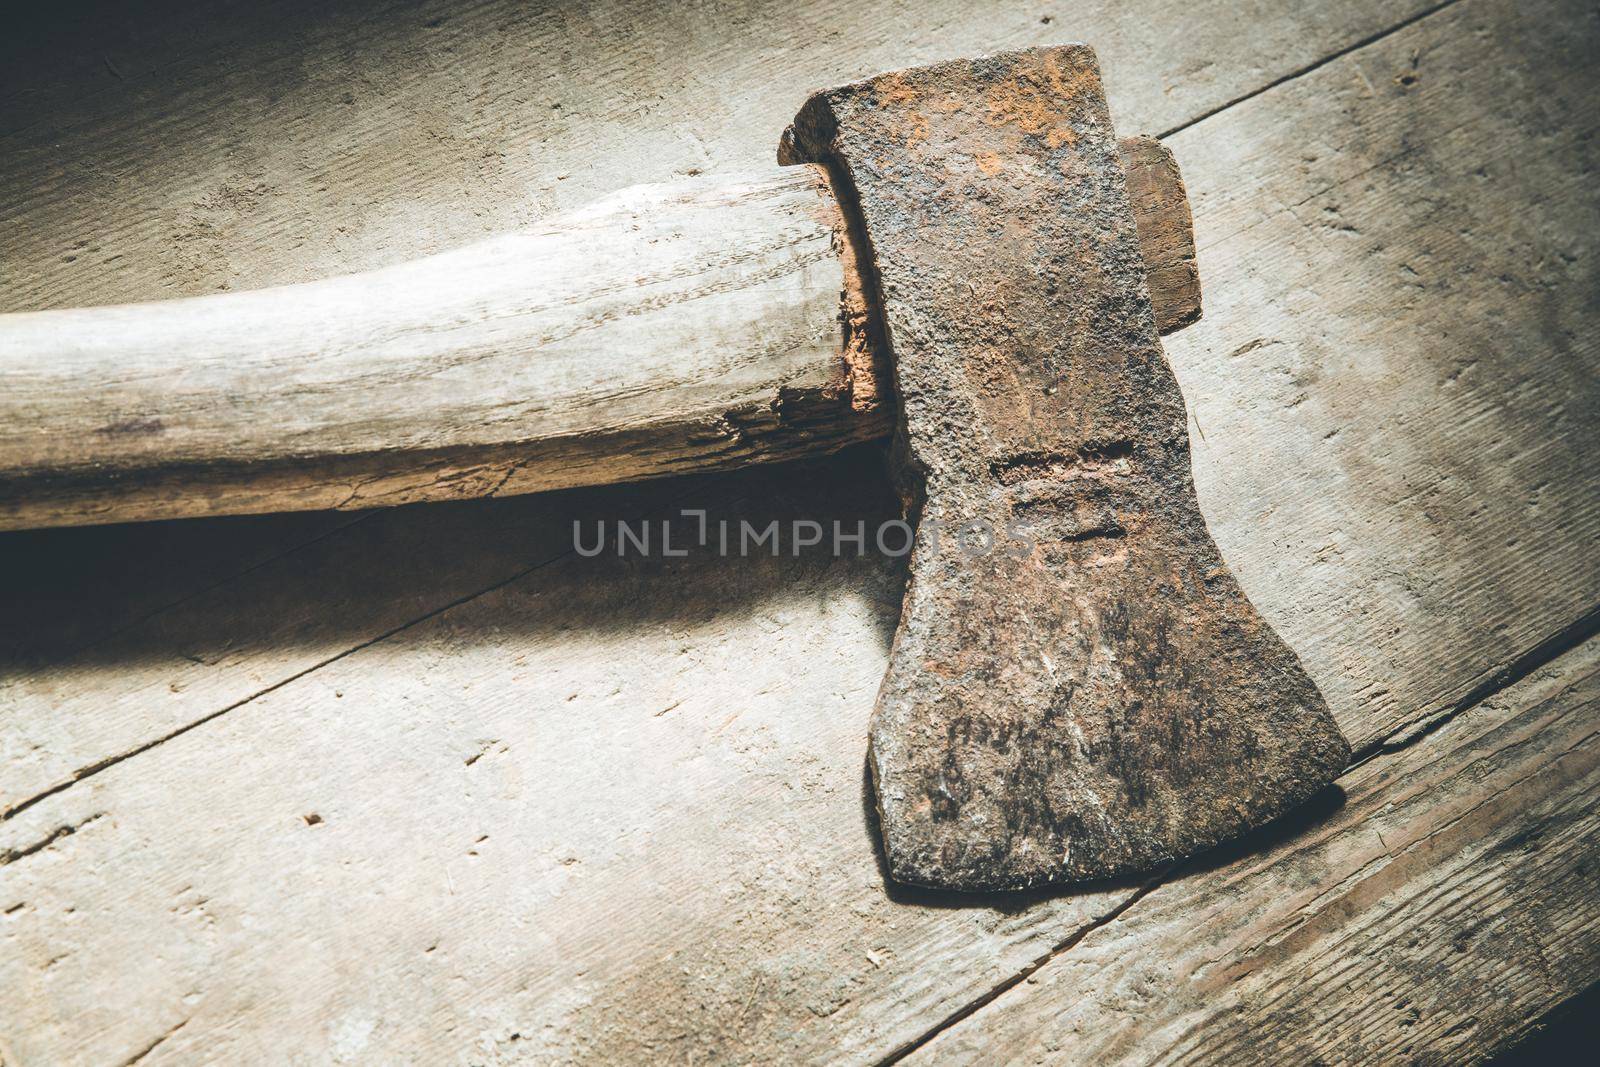 Old rusty axe is lying on rustic wooden floor by Daxenbichler